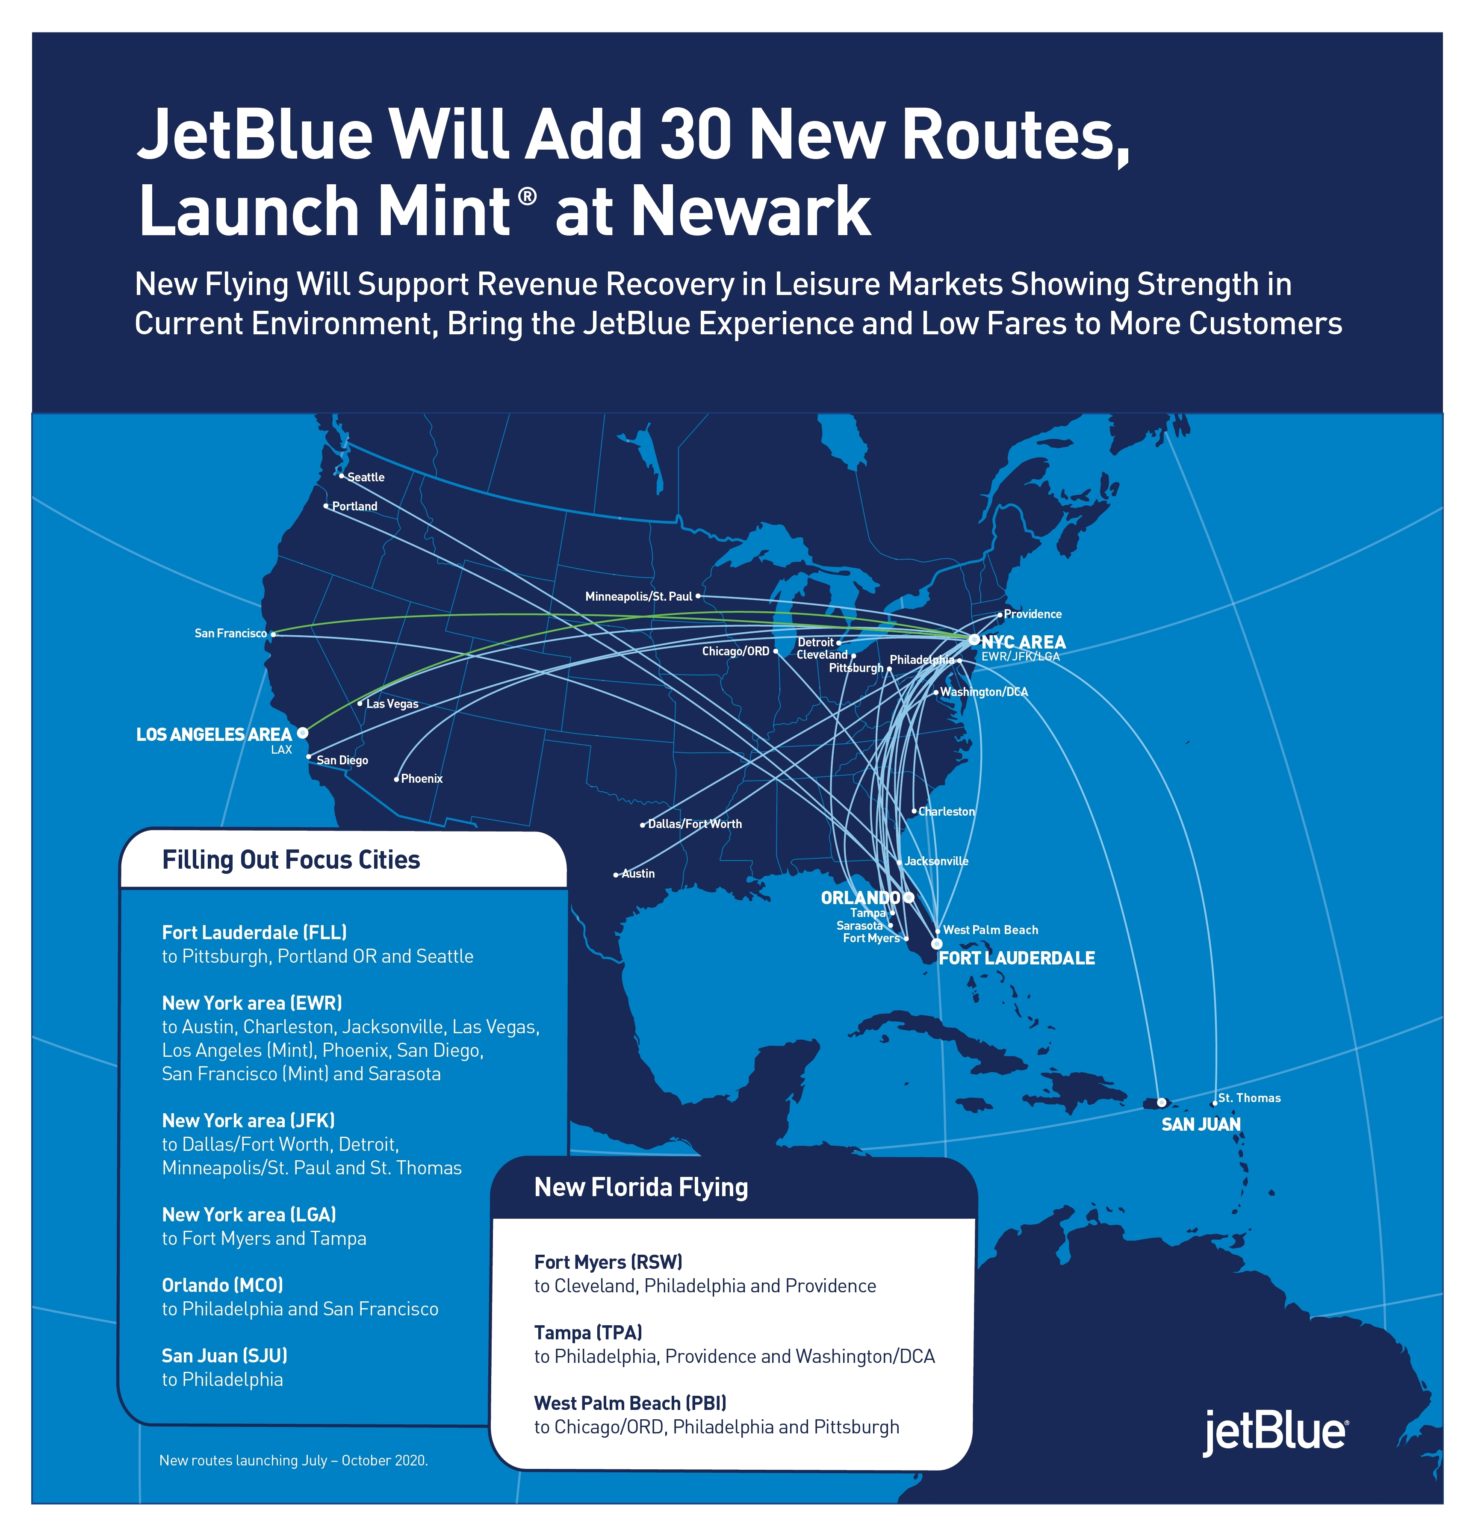 JetBlue Launches Mint At Newark & Announces 30 New Routes